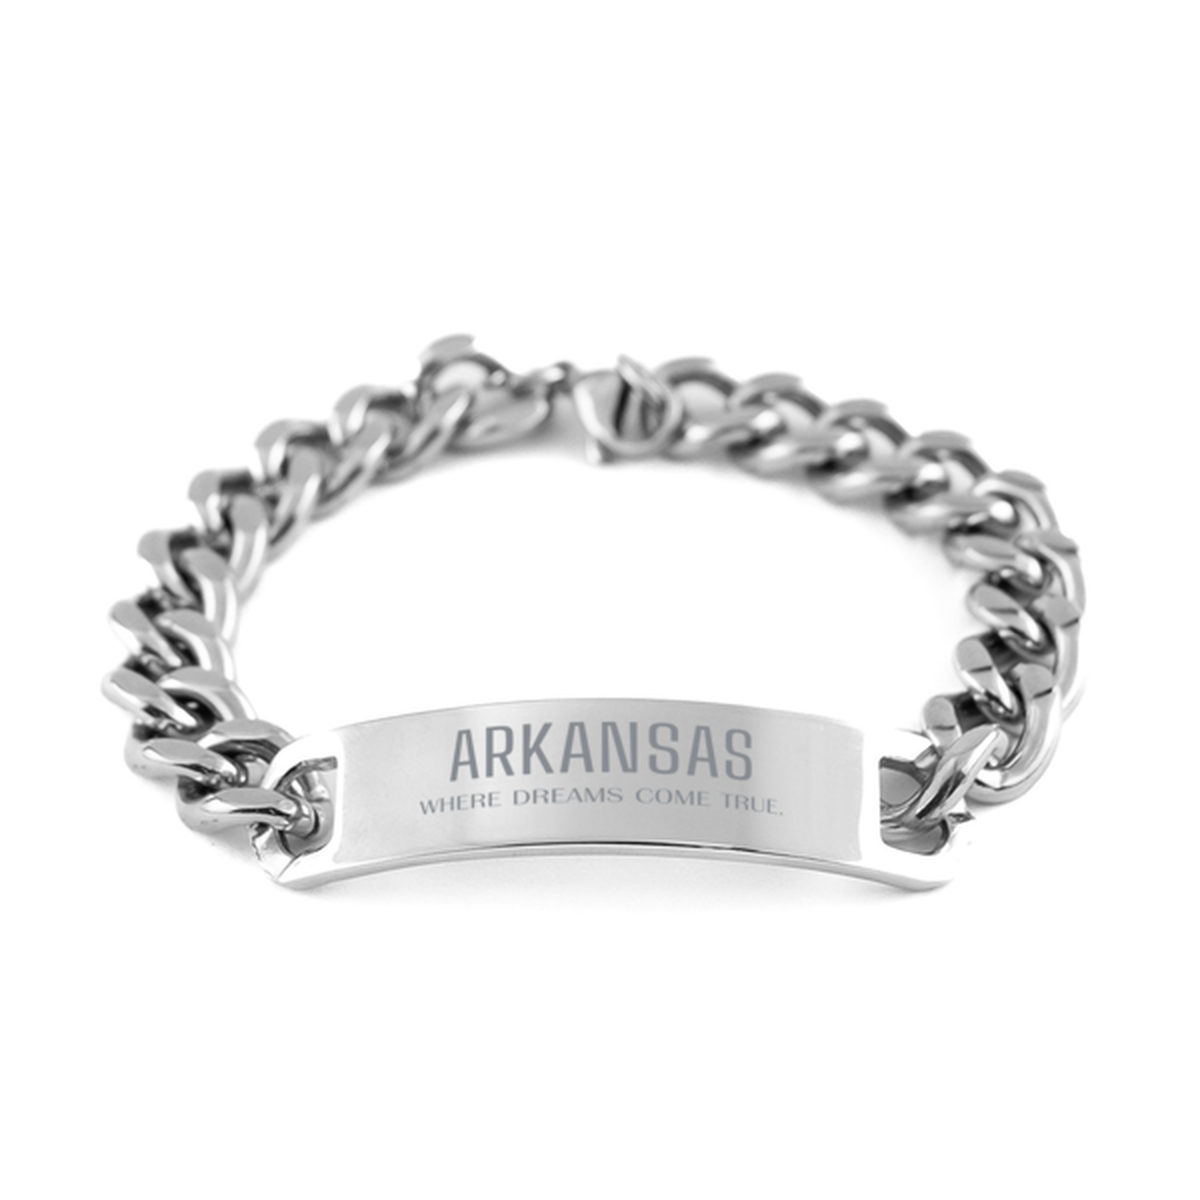 Love Arkansas State Cuban Chain Stainless Steel Bracelet, Arkansas Where dreams come true, Birthday Inspirational Gifts For Arkansas Men, Women, Friends